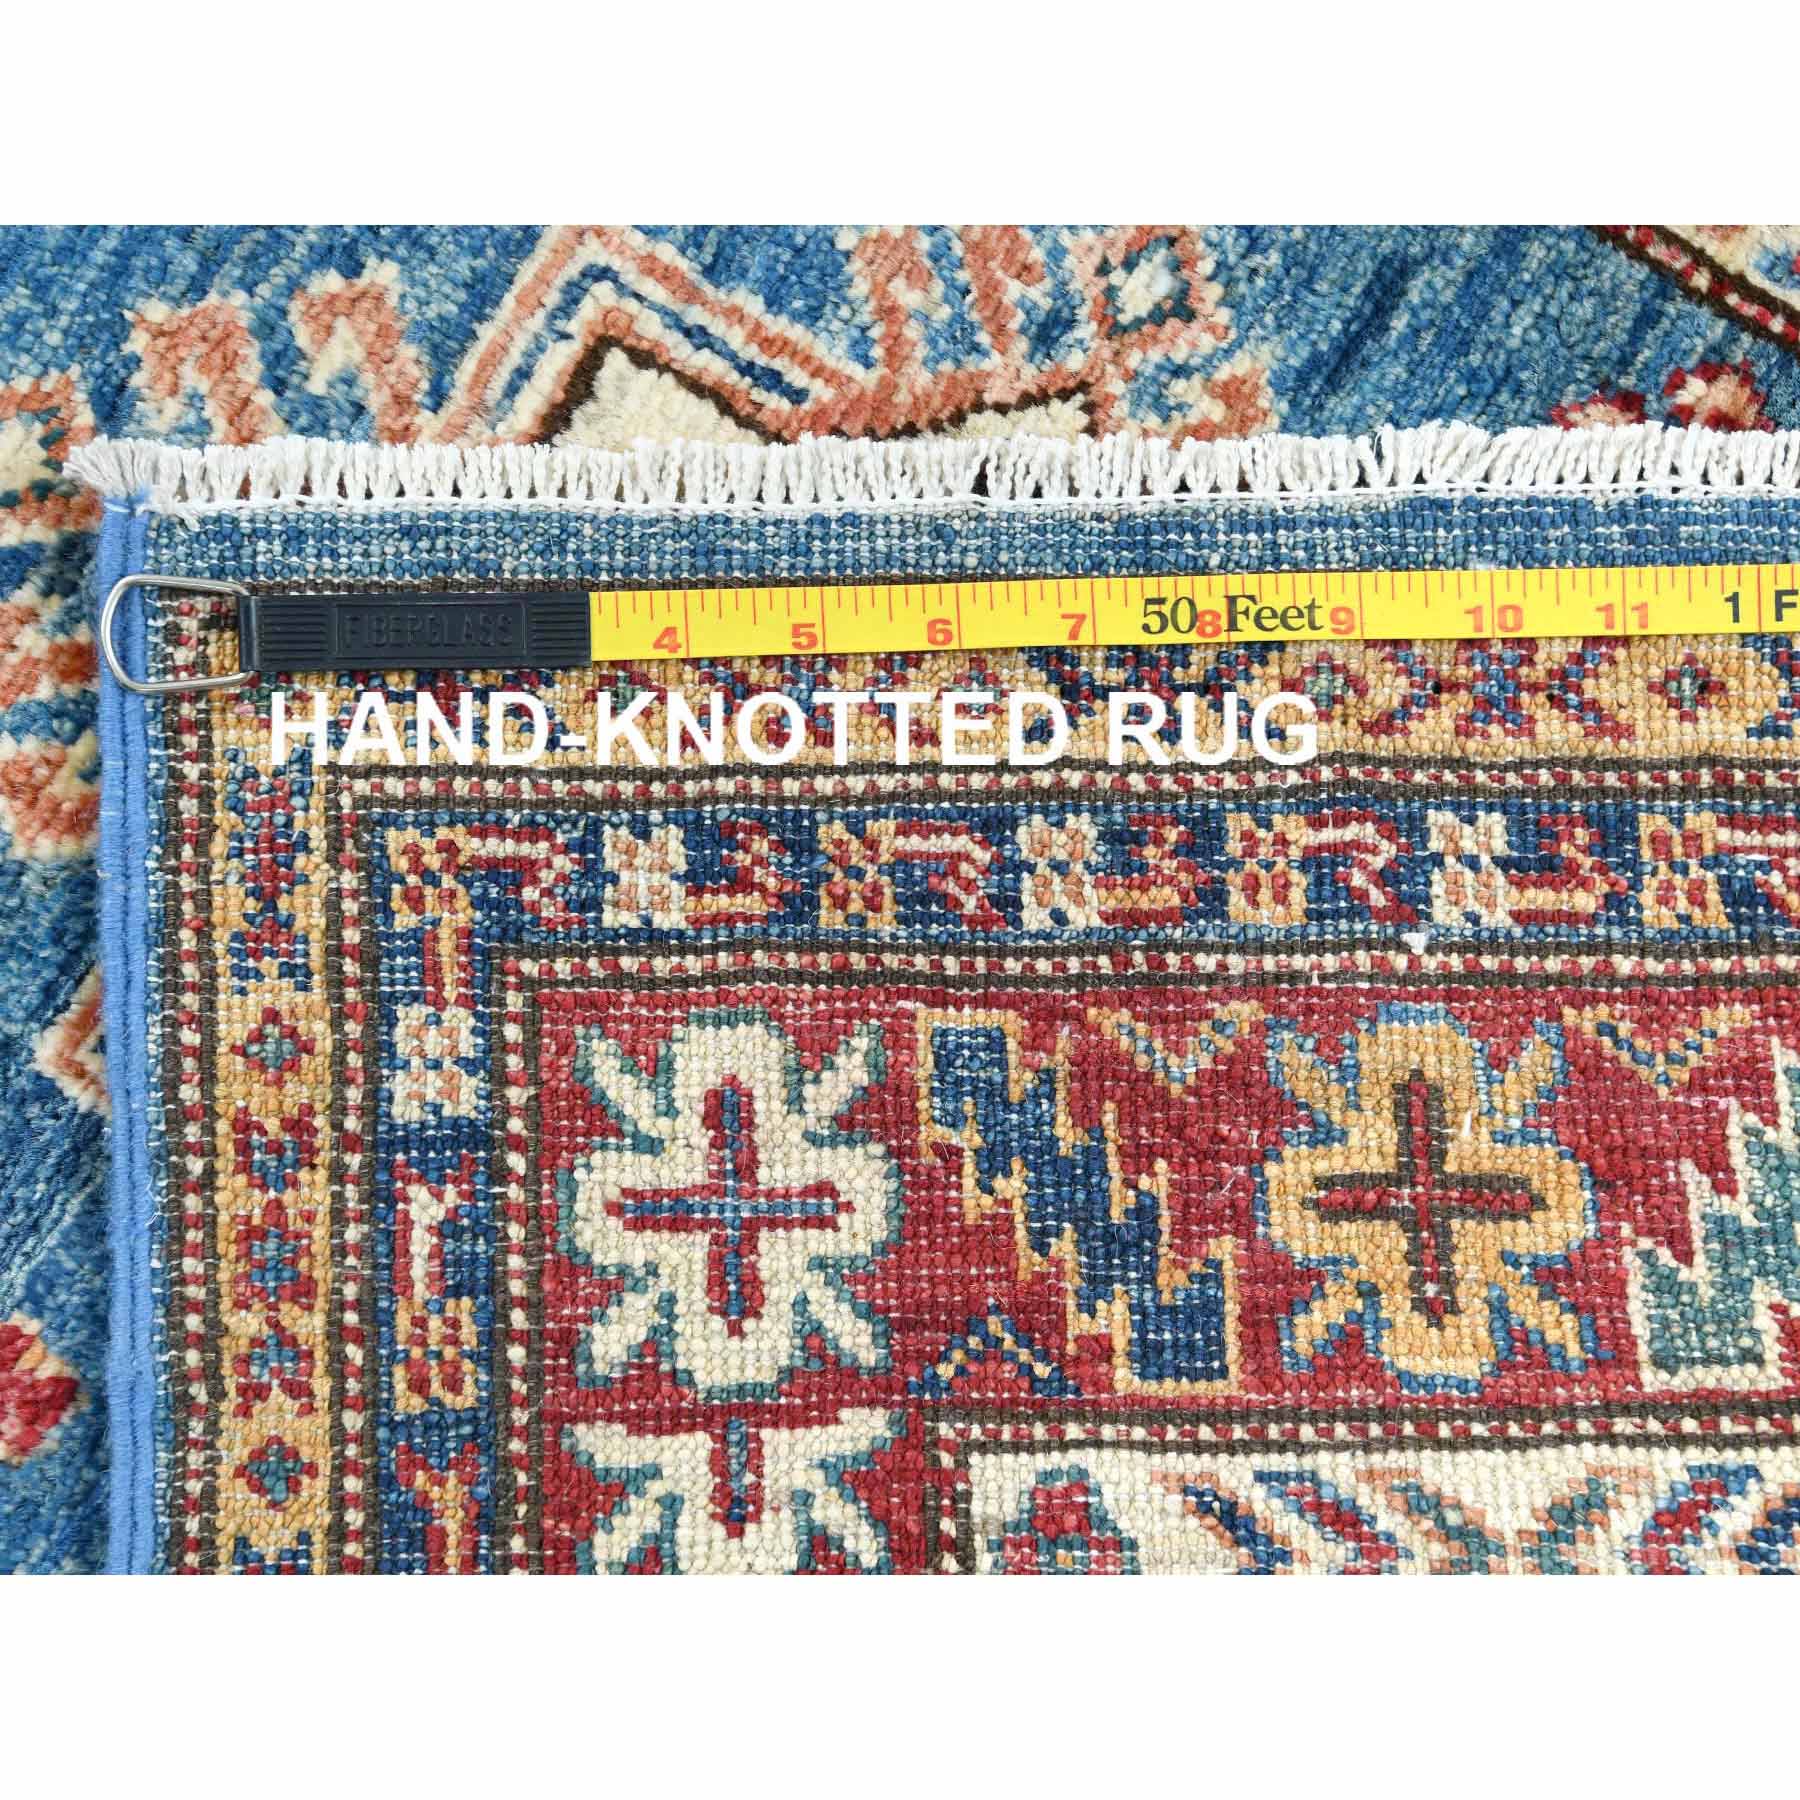 Kazak-Hand-Knotted-Rug-413010